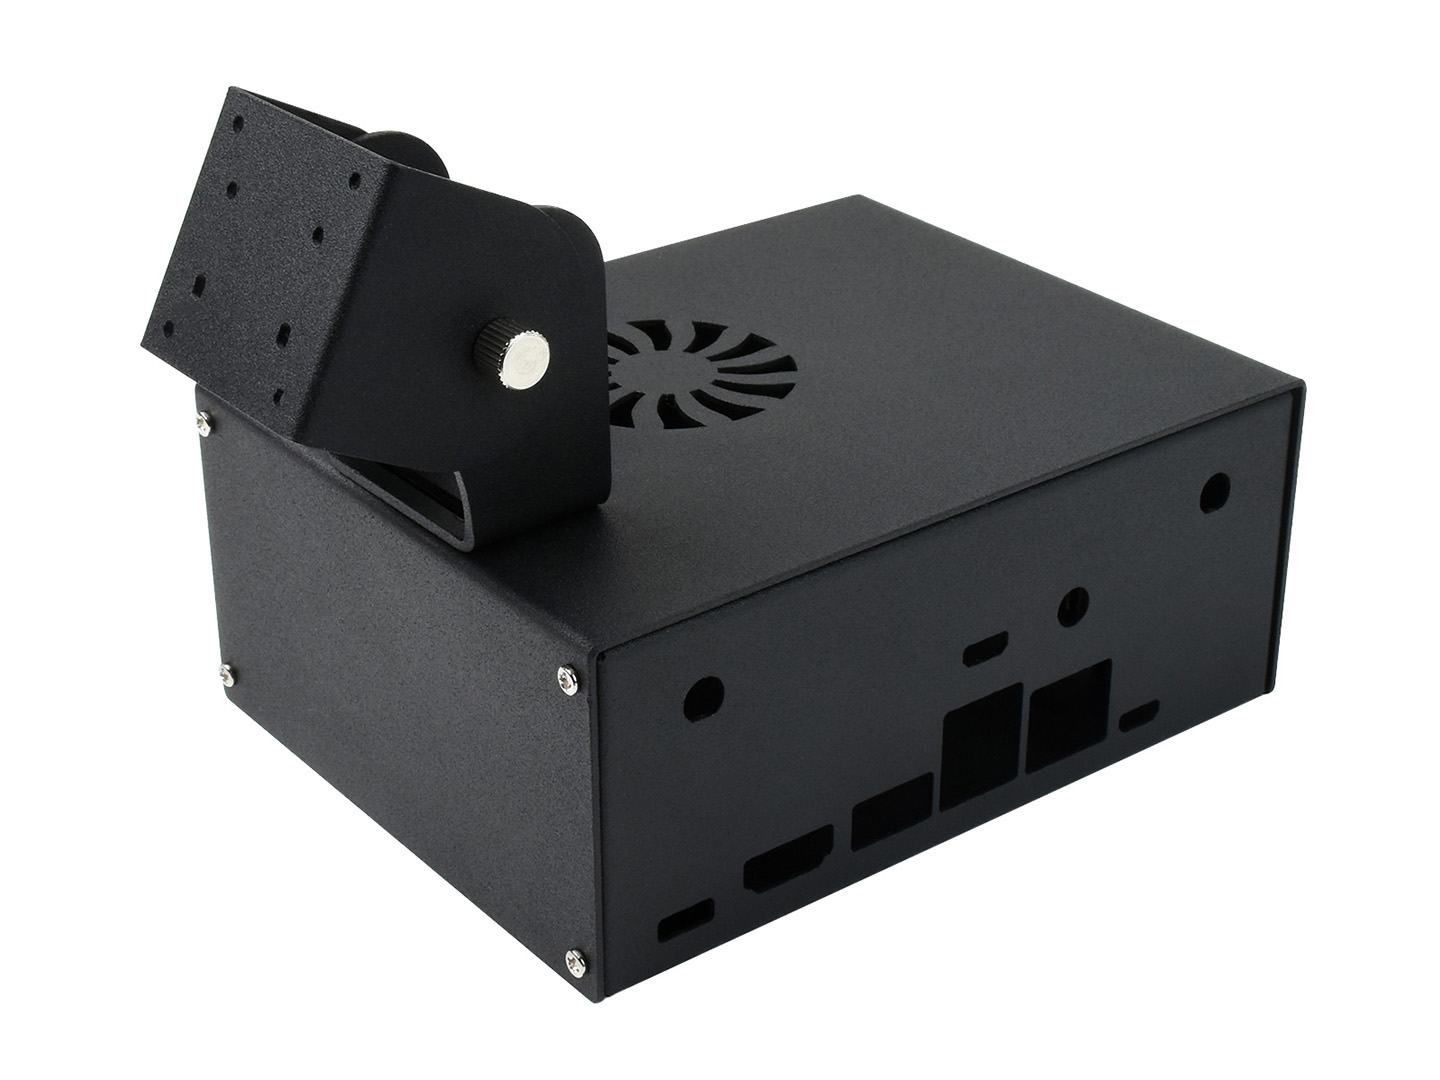 Jetson Nano 2GB Developer Kit 专用金属外壳 带摄像头支架迷你机箱【2GB专用】